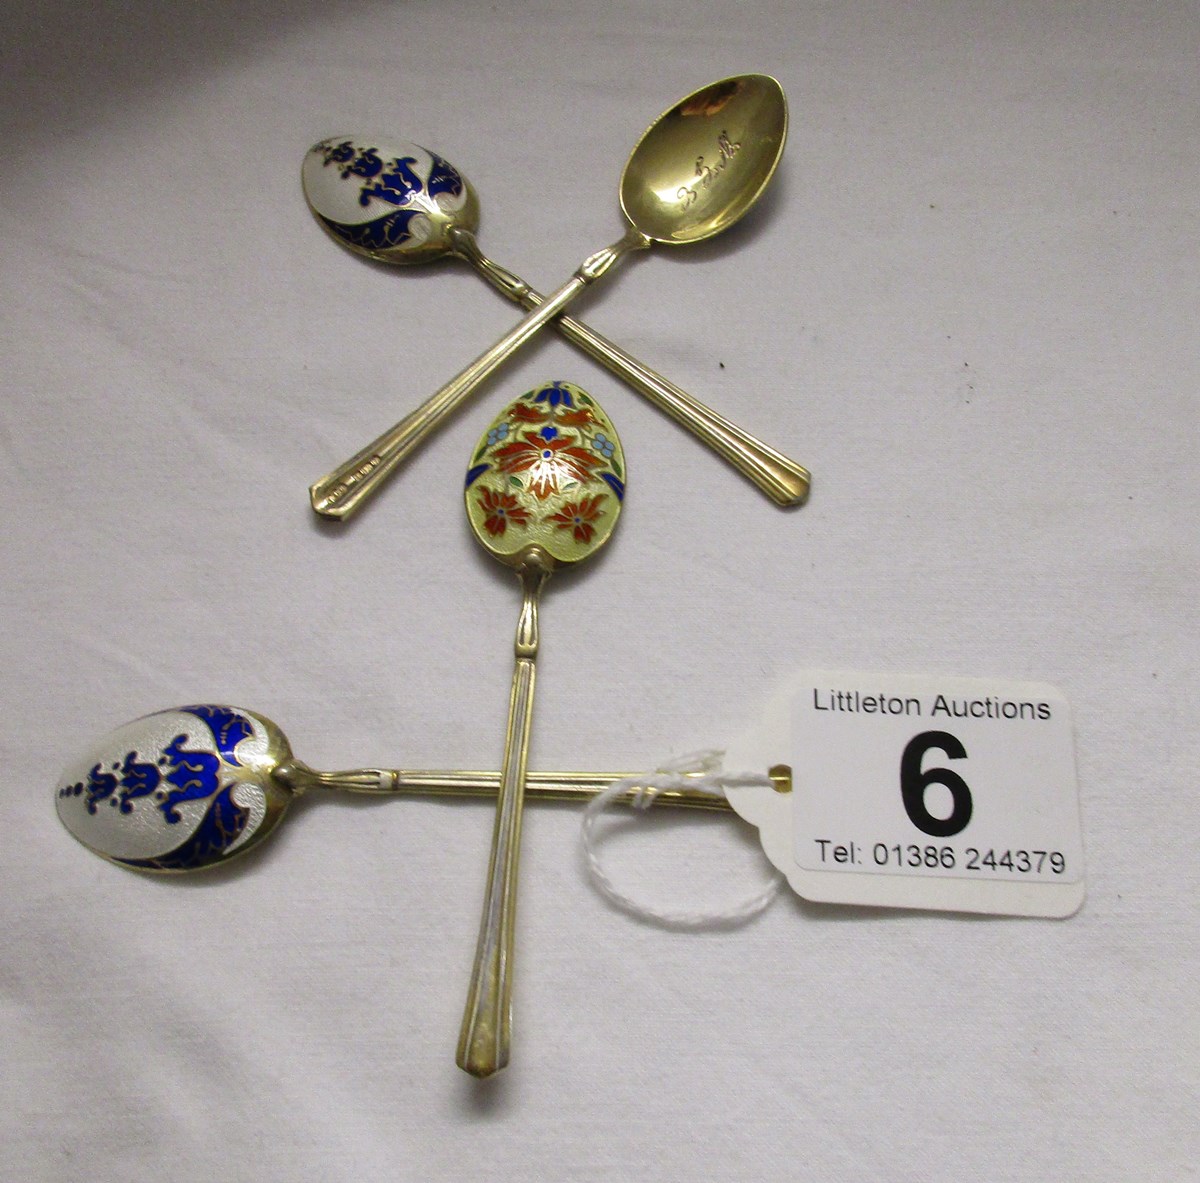 4 silver & enamelled spoons